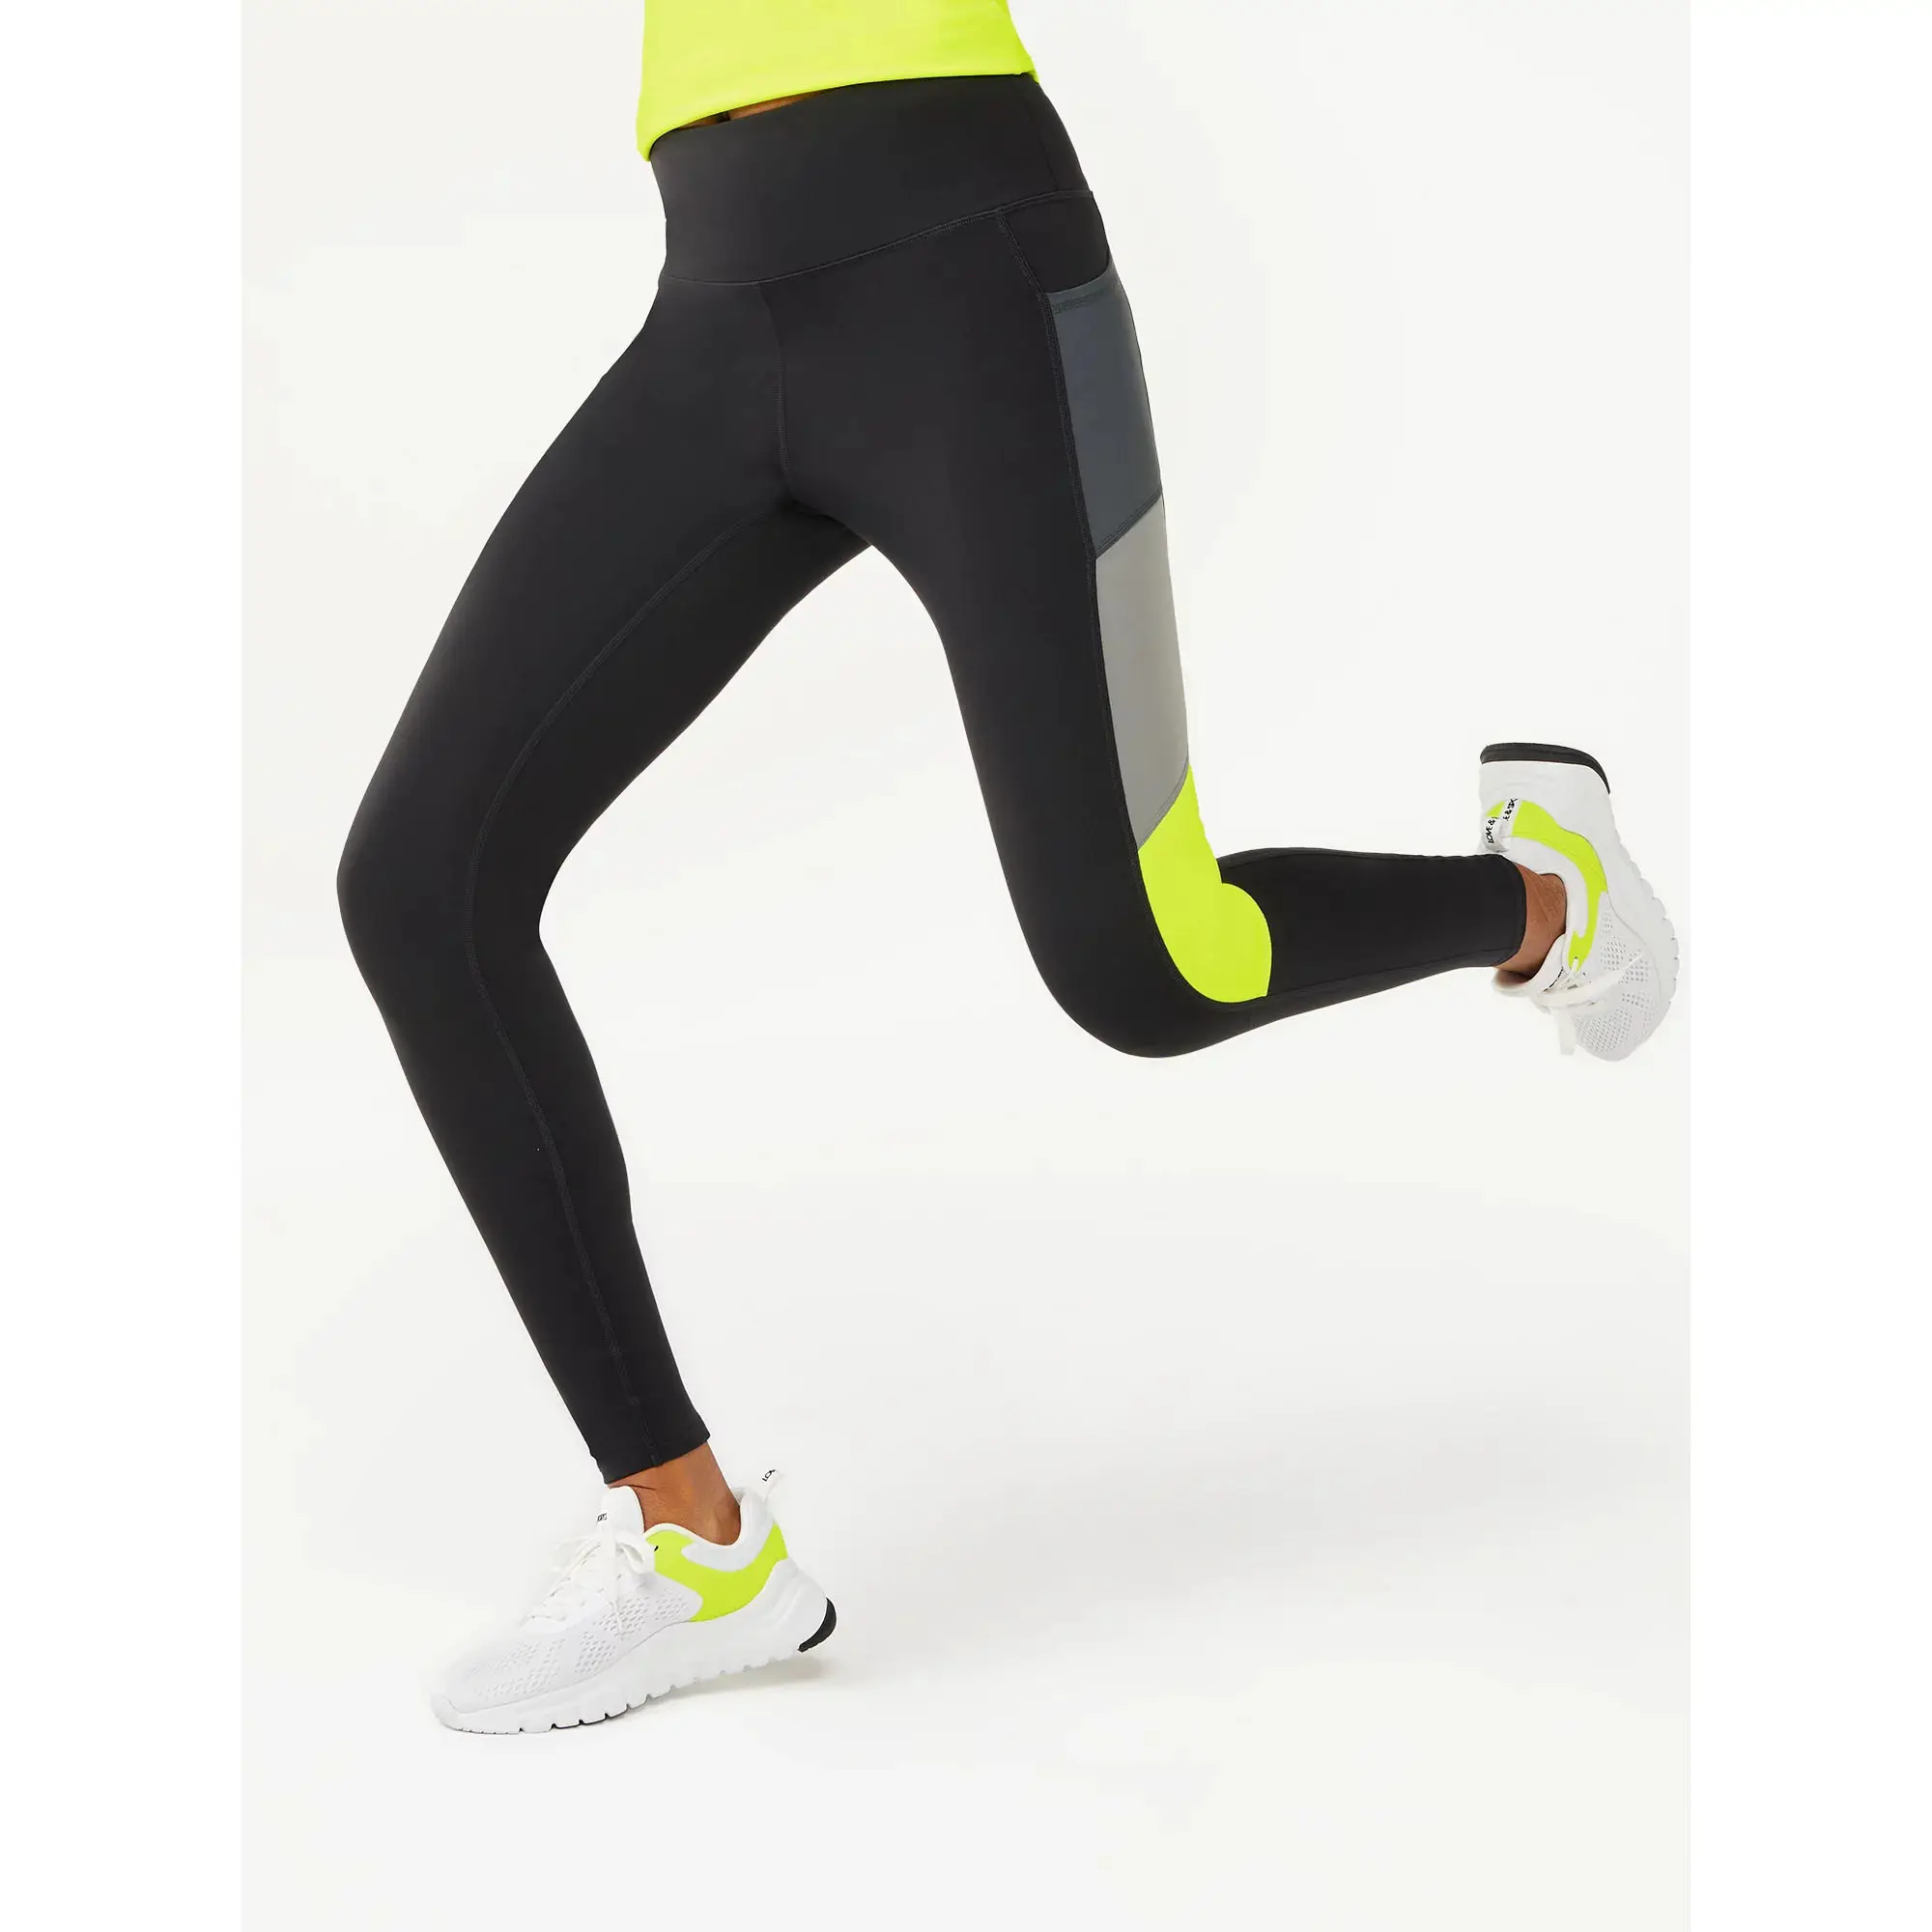 Legging olahraga untuk wanita ketat sesuai pinggang tinggi Panel kerja spandeks poliester dibuat latihan Yoga celana Fitness untuk wanita